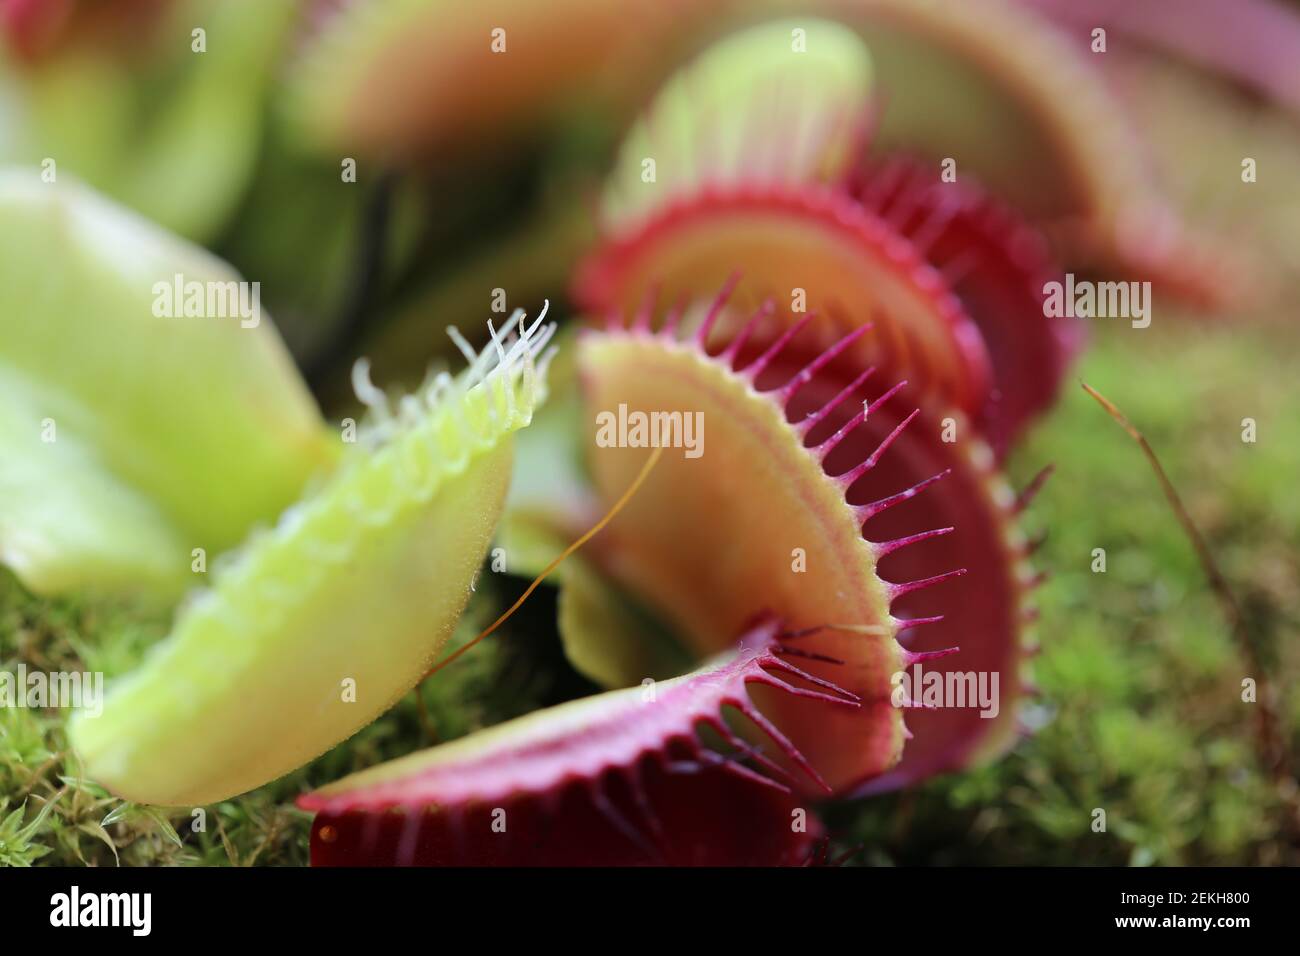 Venus flytrap Dionaea muscipula on blurred background.Carnivorous plants. Stock Photo